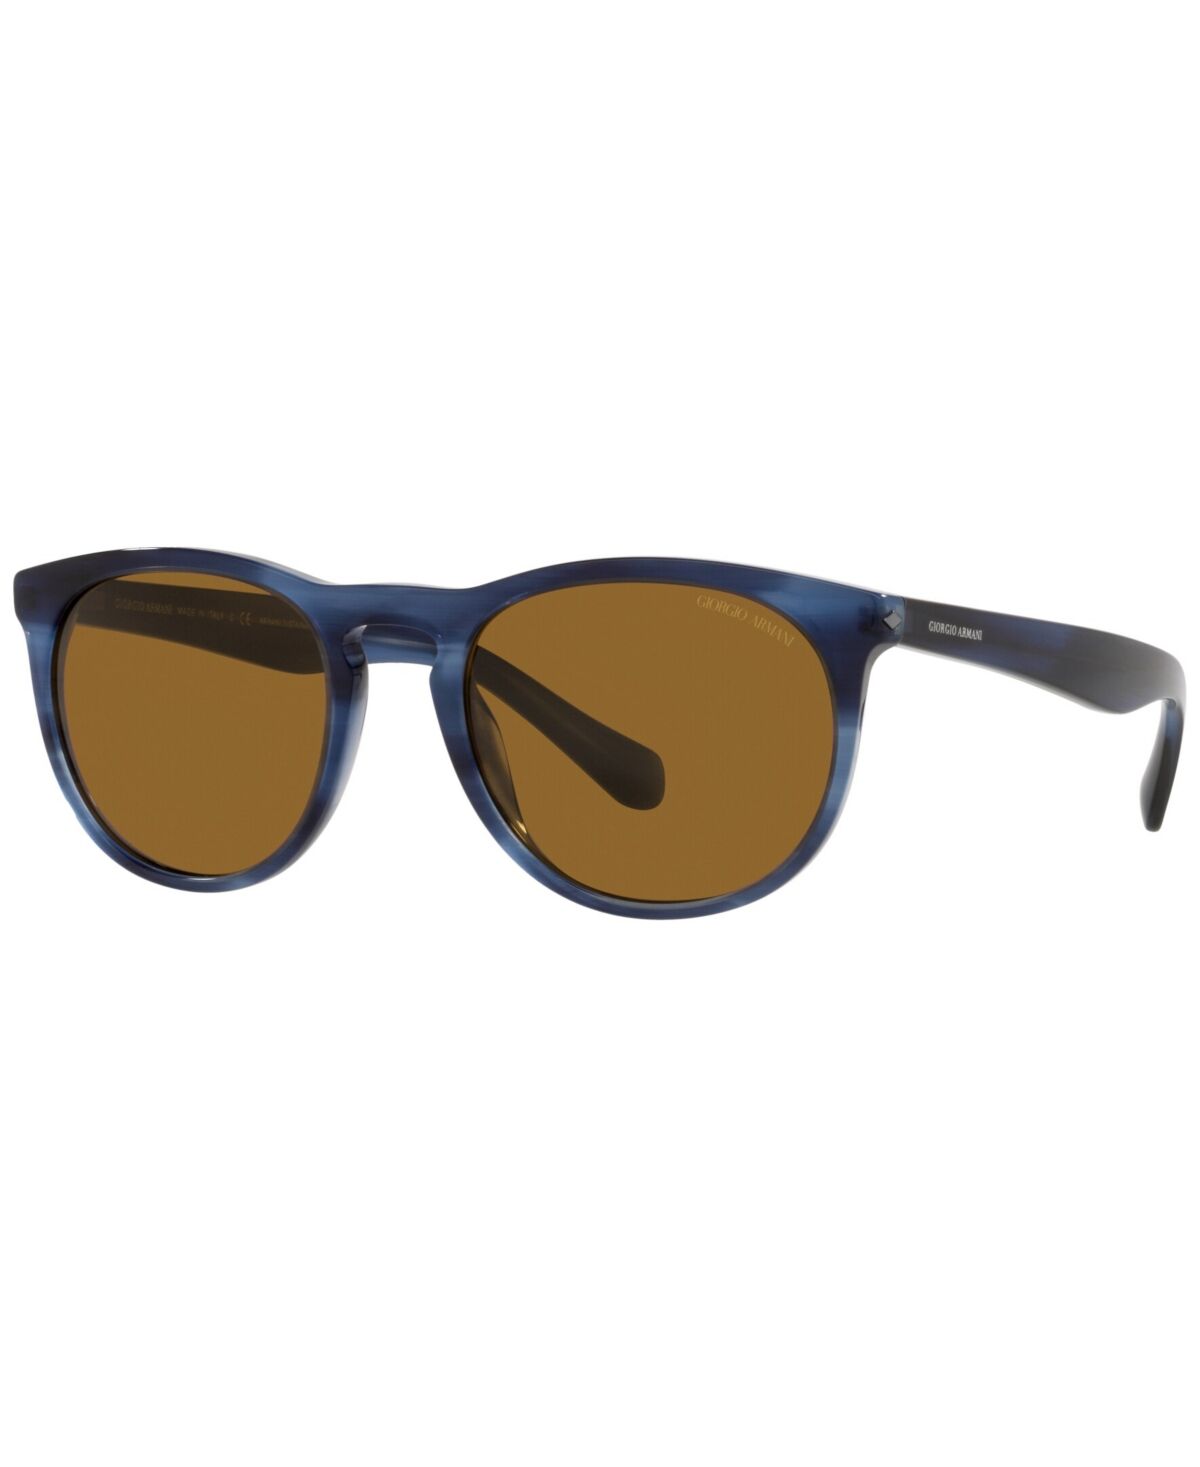 Giorgio Armani Sunglasses, AR8149 54 - Stripped Blue